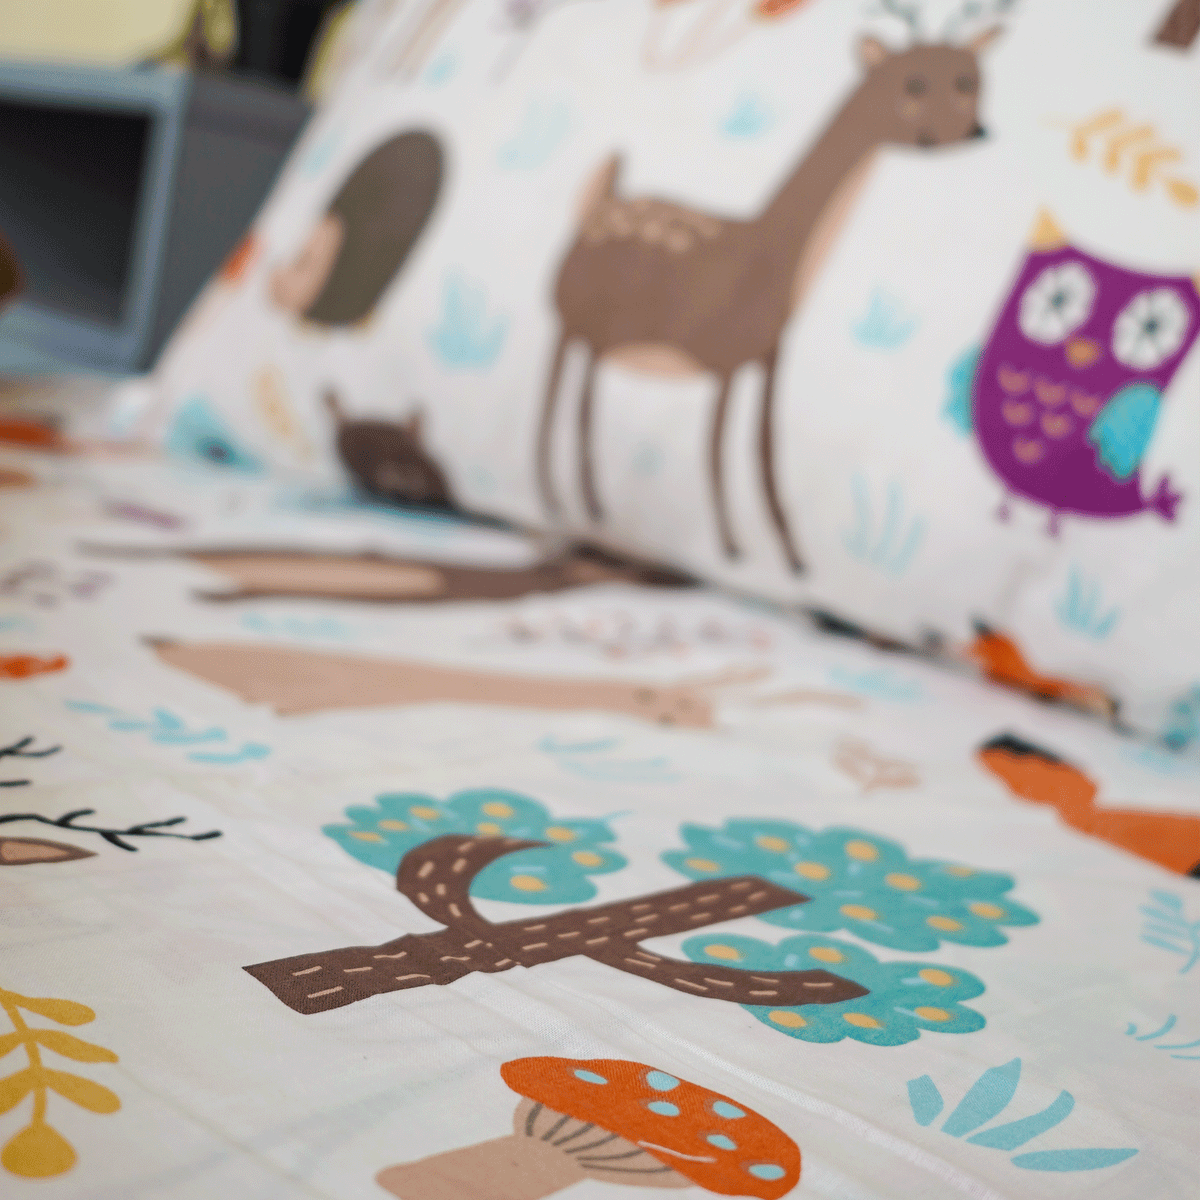 forest life single Kids Duvet Cover & Comforter Set